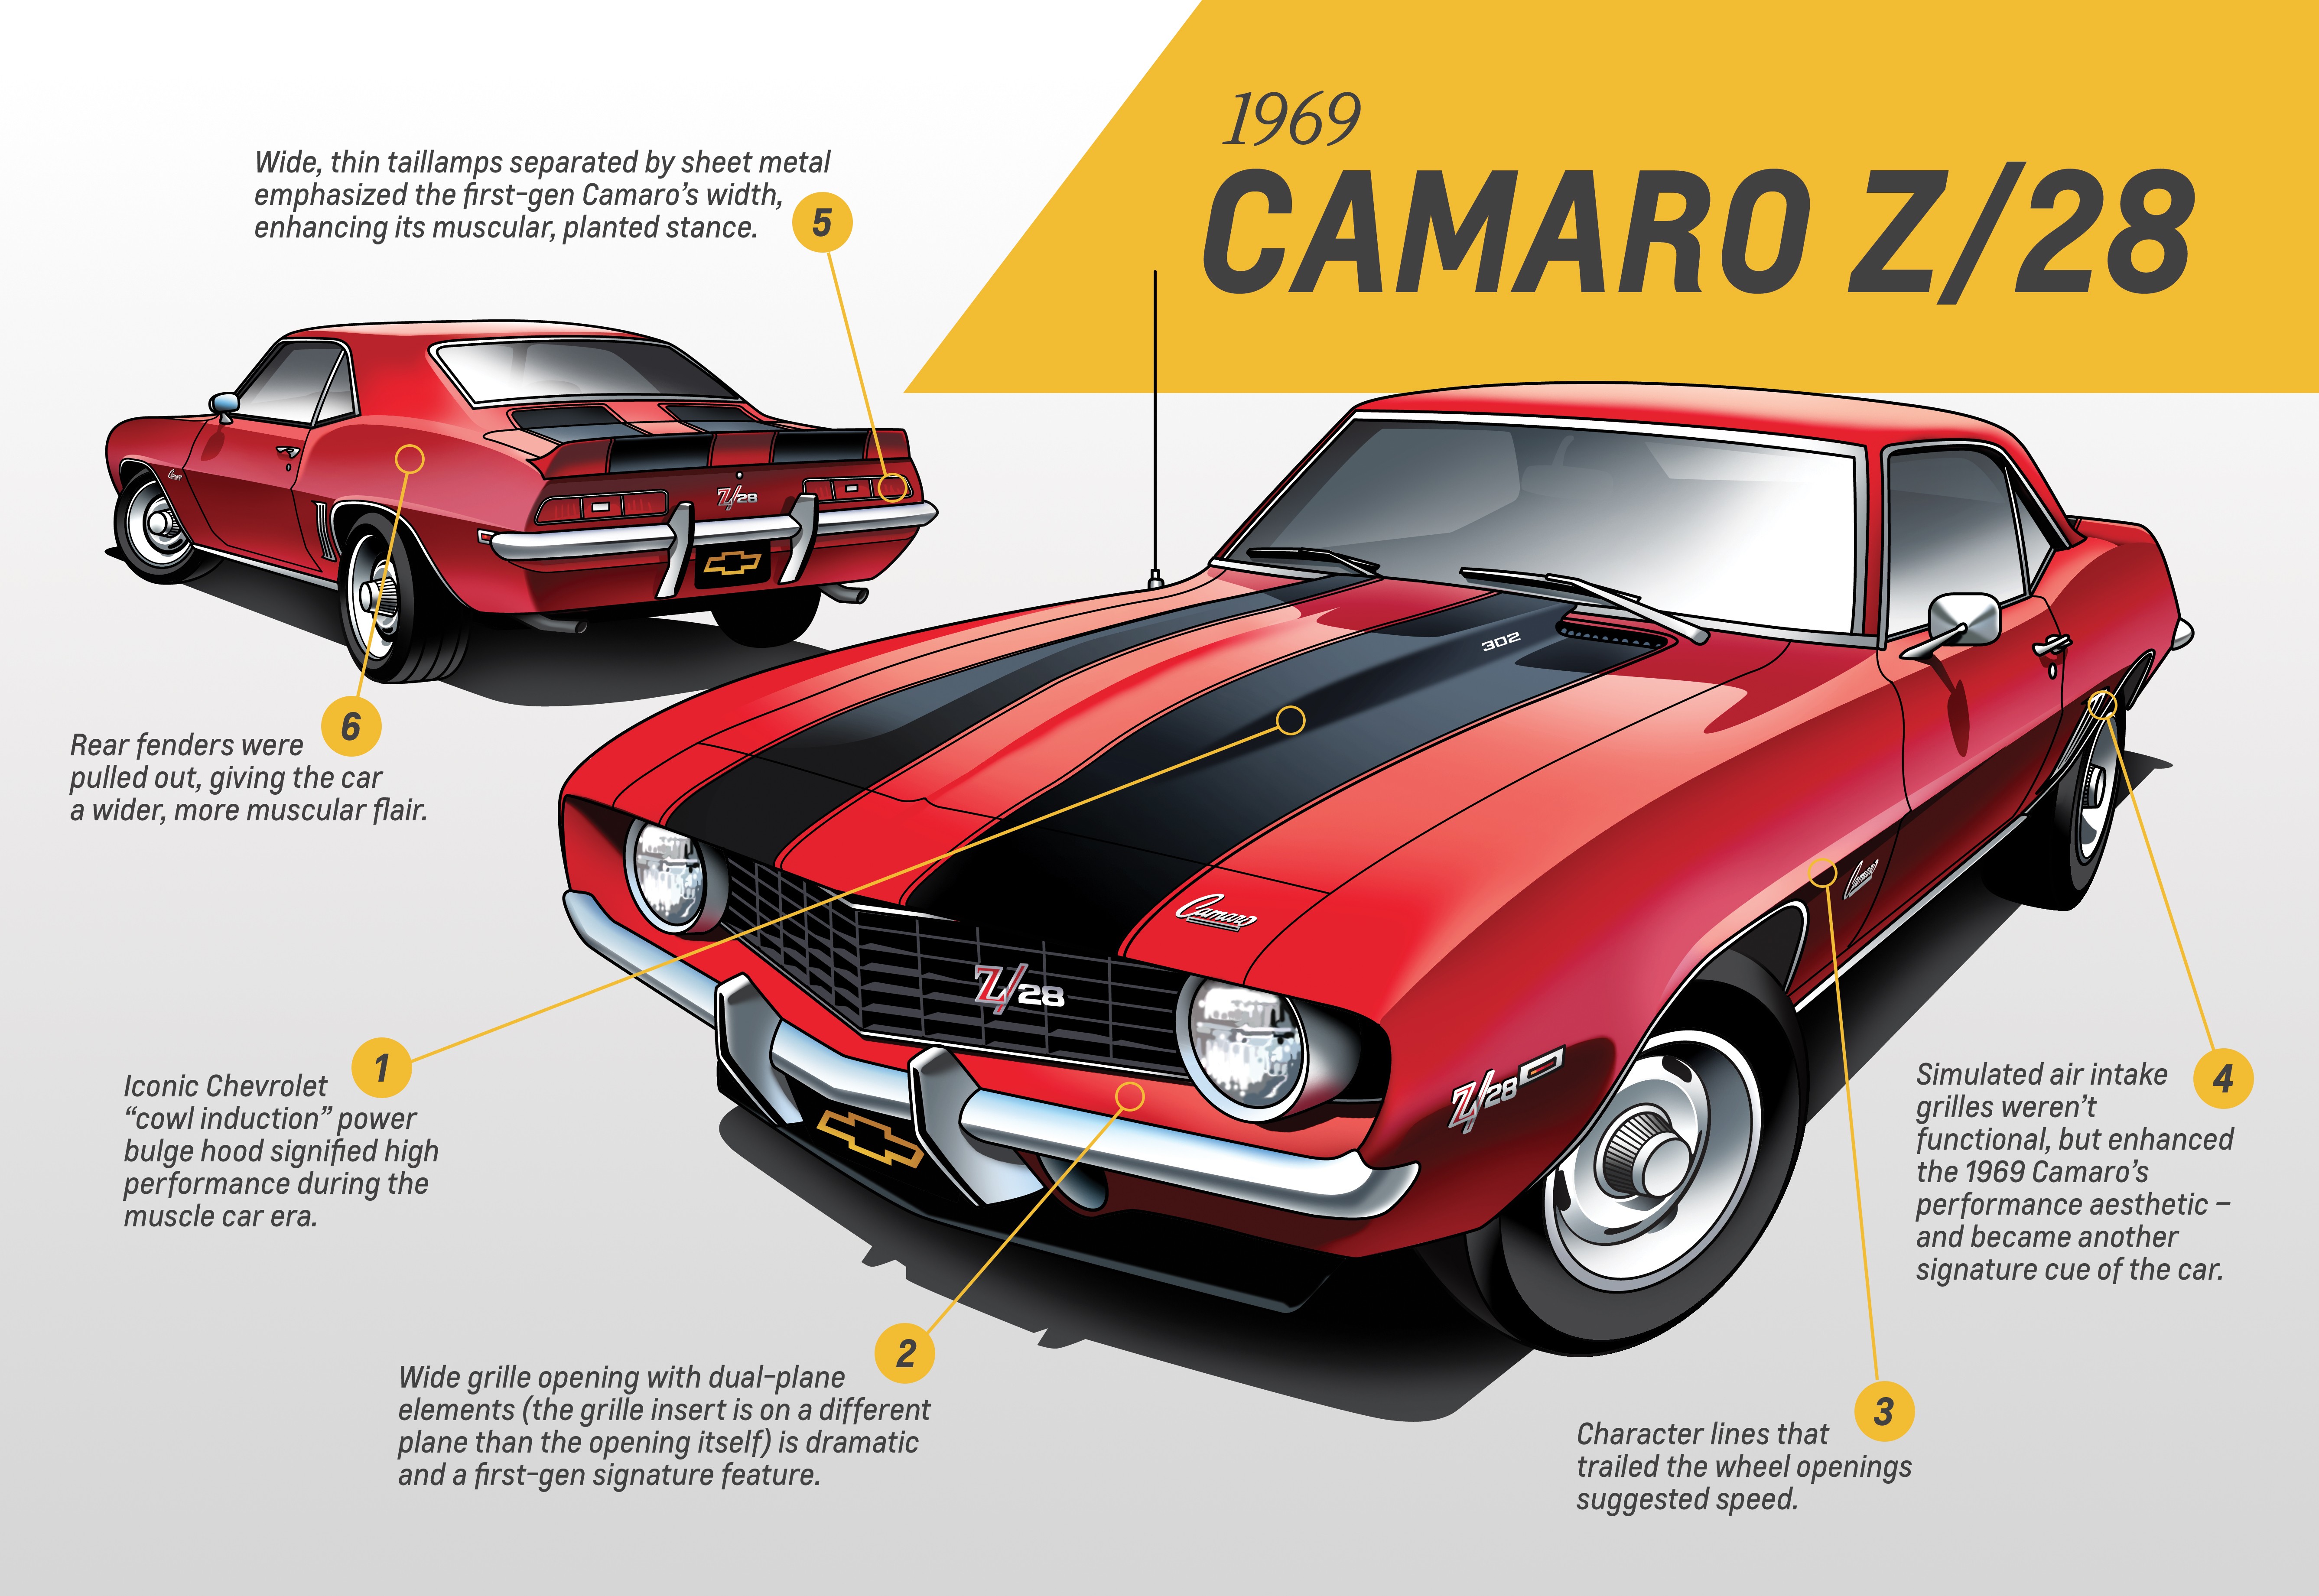 Camaro - First Generation – 1967-69 - Ed Welburn, vice president of GM Global Design